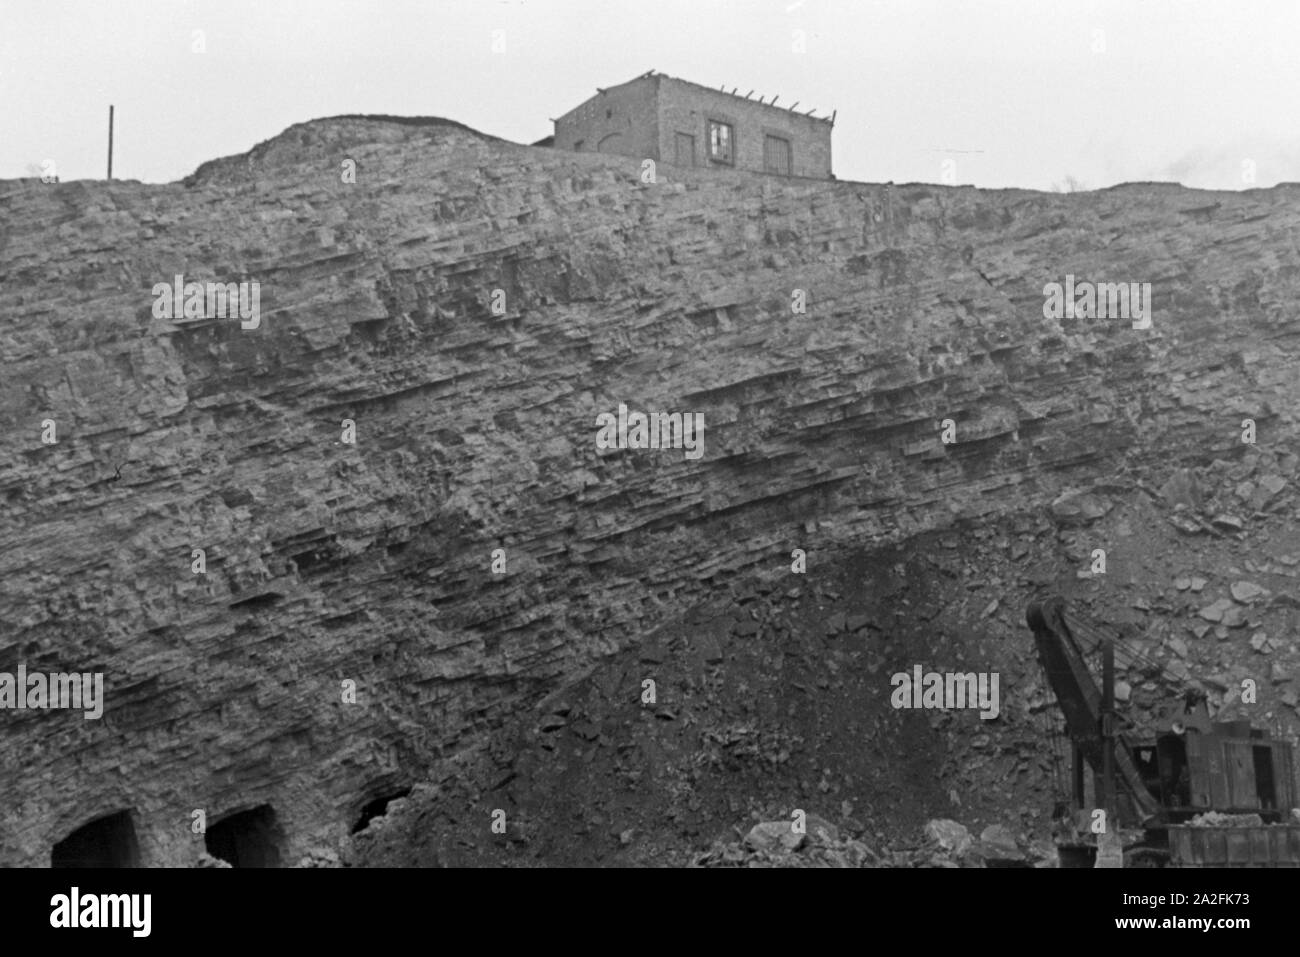 Kalksandsteinabbau in Rüdersdorf bei Berlin, Deutschland 1930er Jahre. Lime stone digging ar Ruedersdorf near Berlin, Germany 1930s. Stock Photo